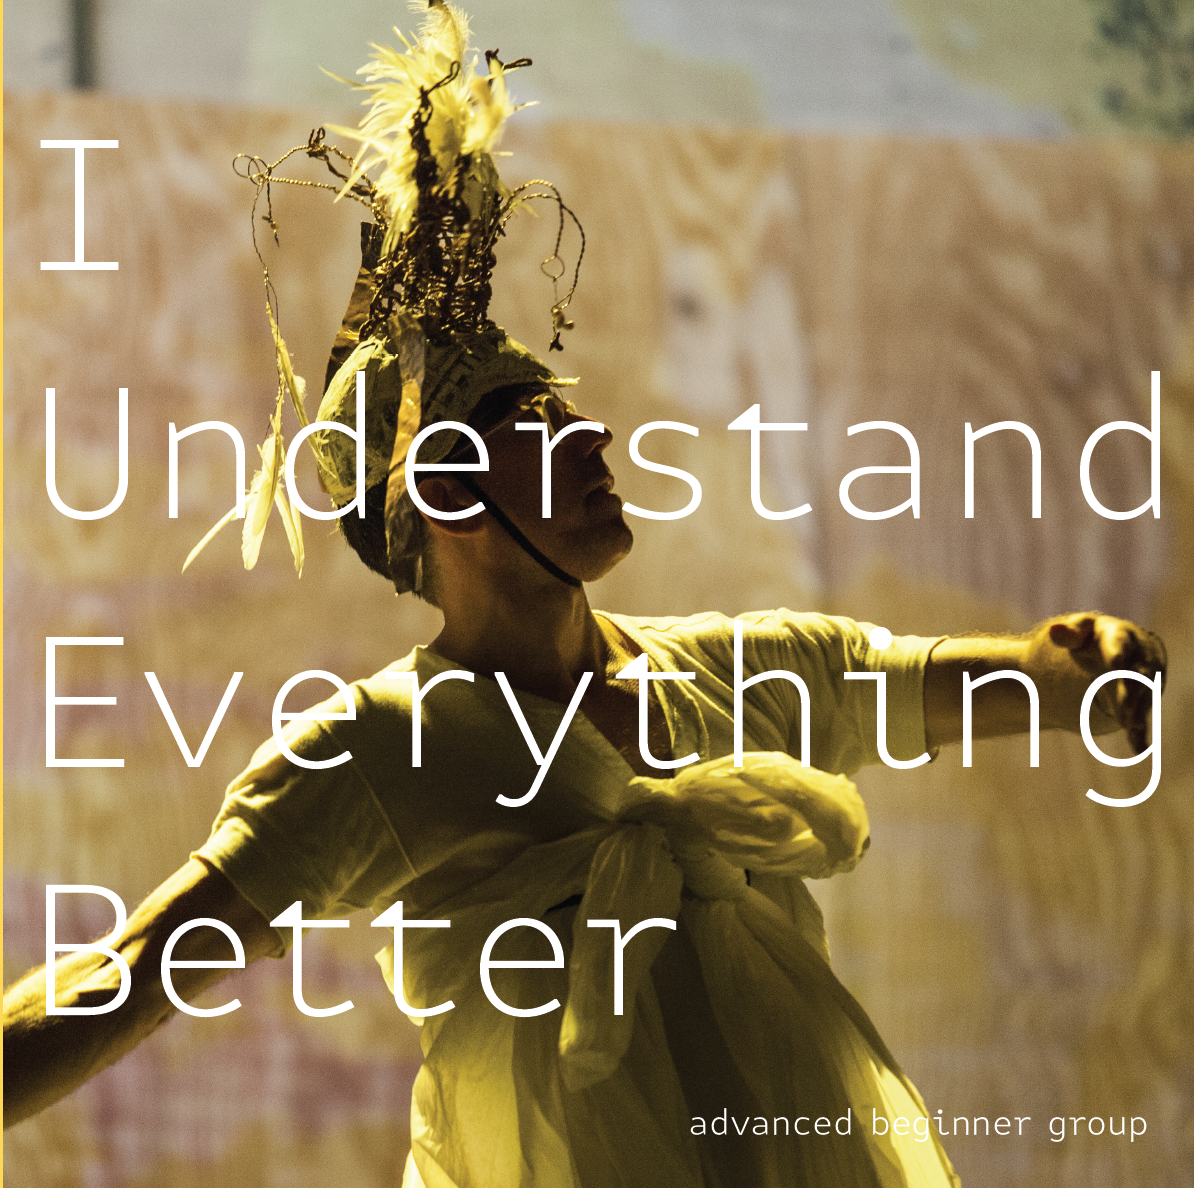 I Understand Everything Better